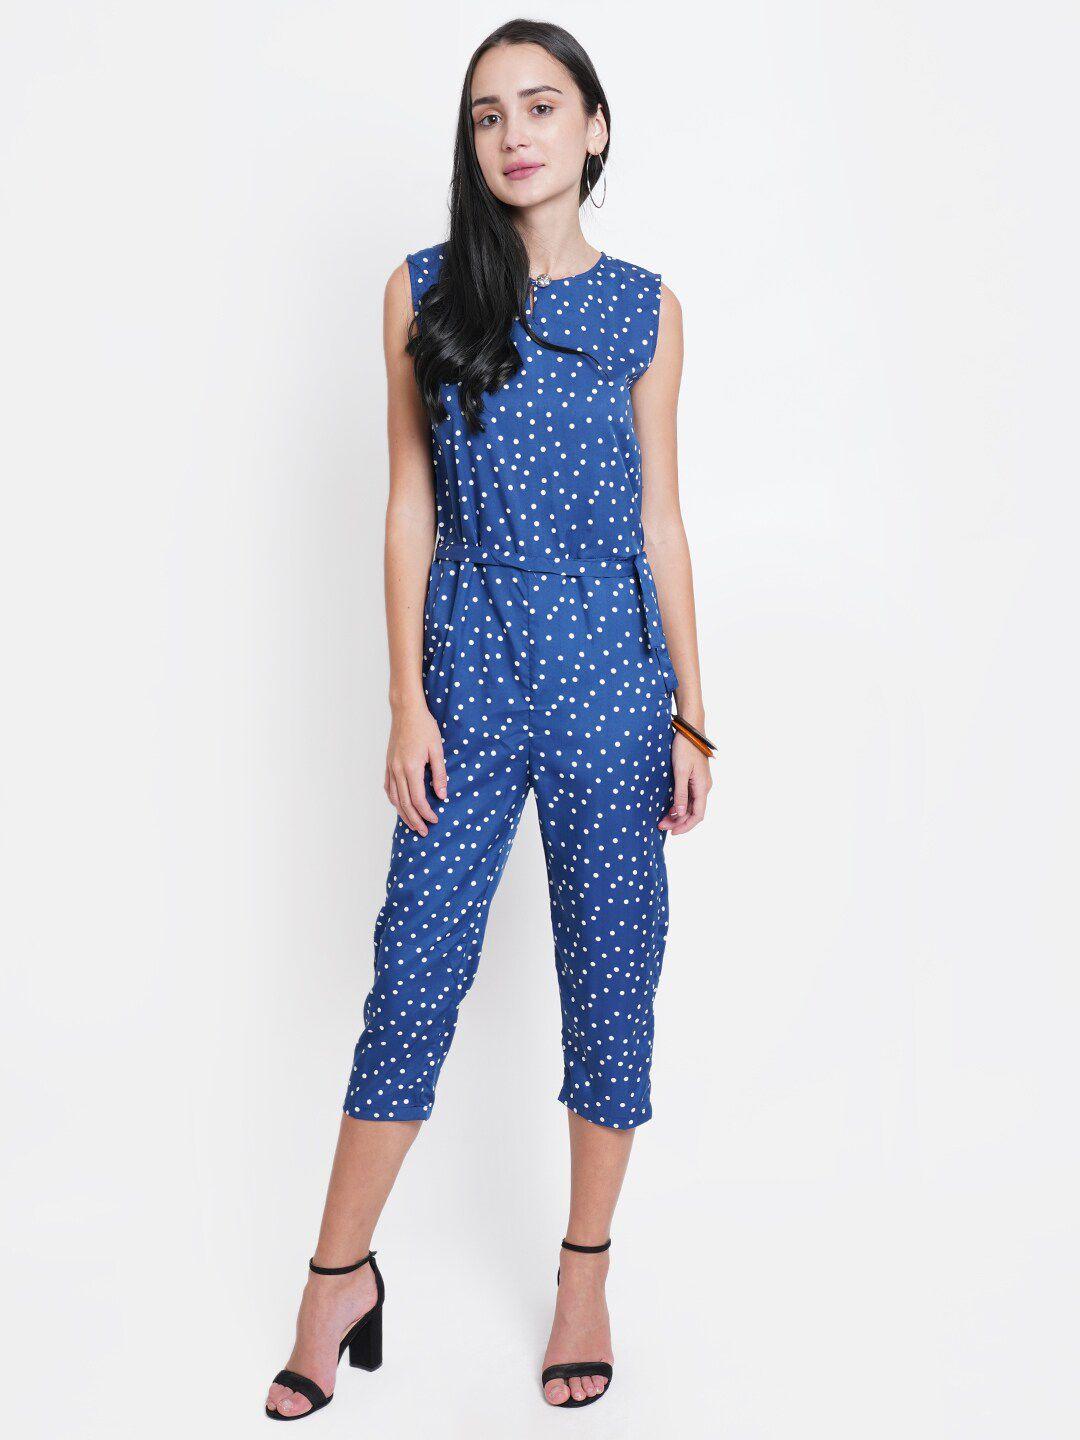 westclo blue & white polka dots printed capri jumpsuit